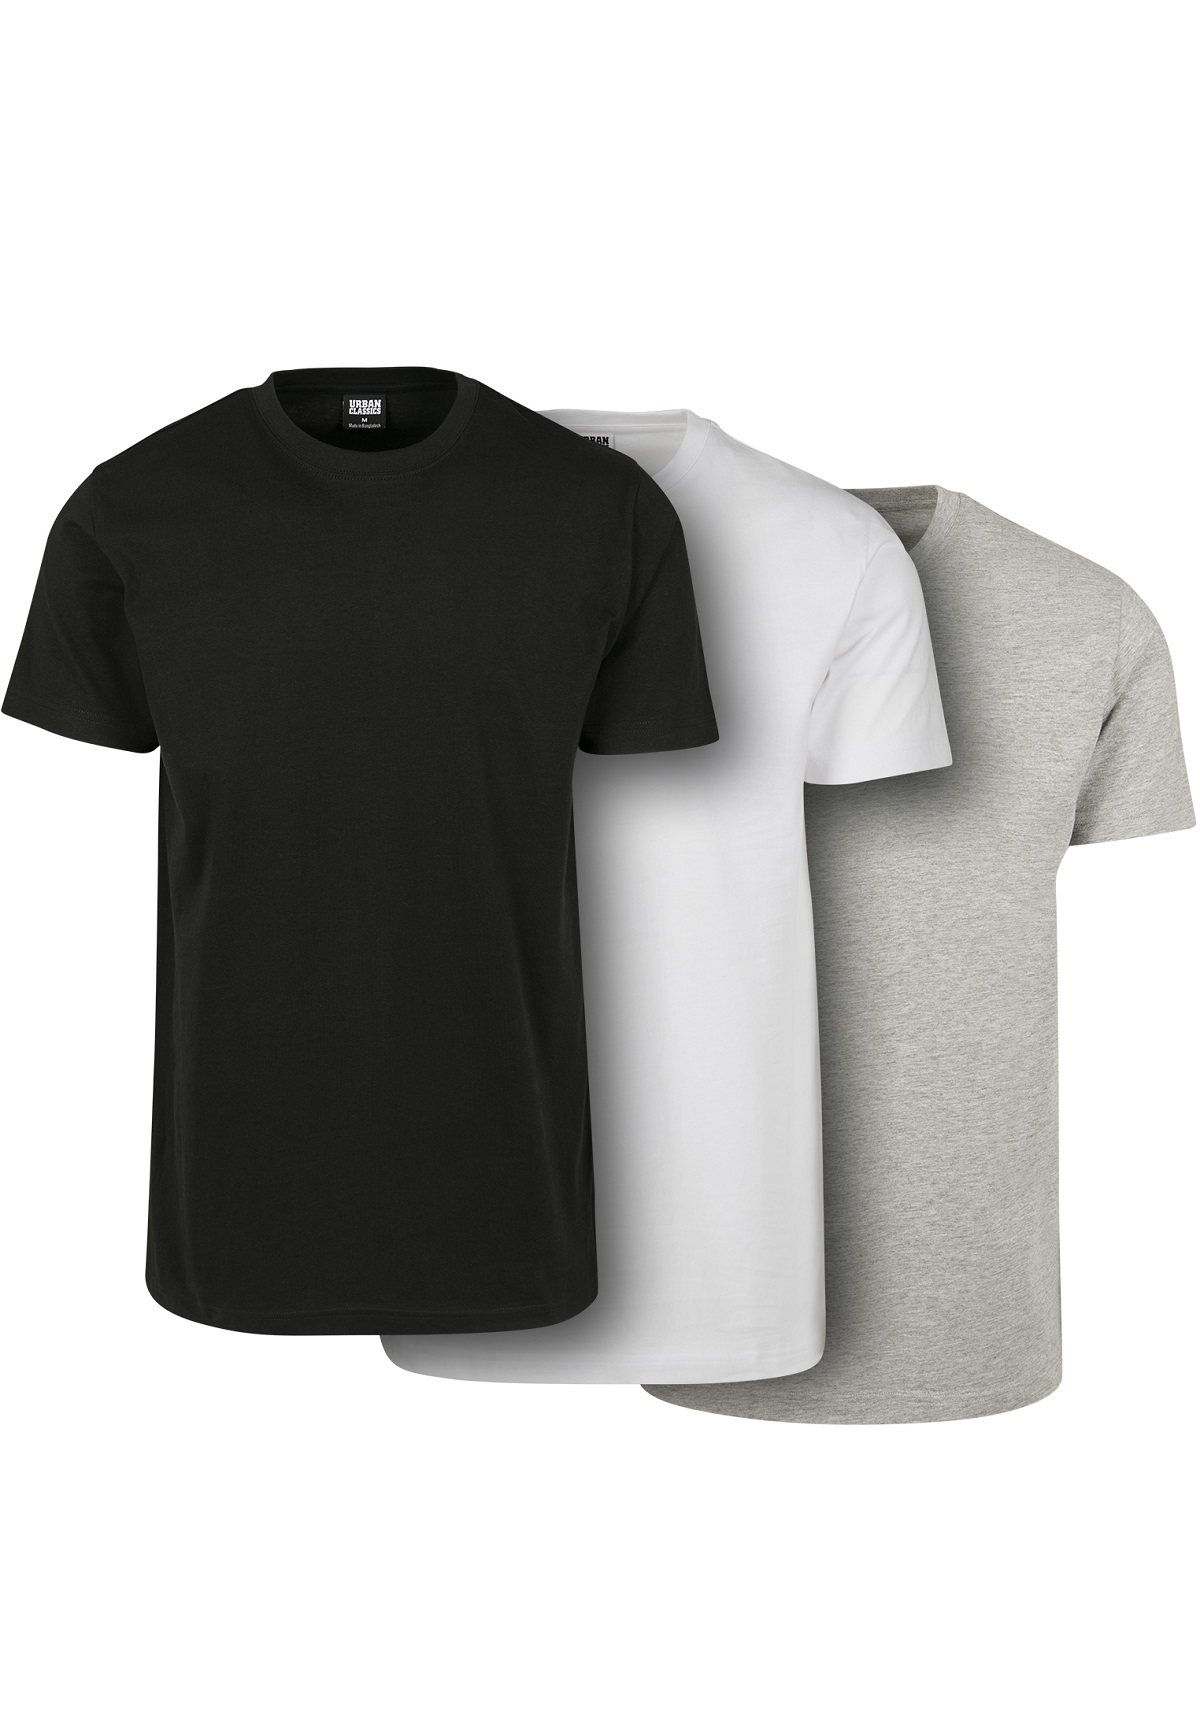 URBAN CLASSICS Basic T-Shirts 3-Pack schwarz weiß grau M